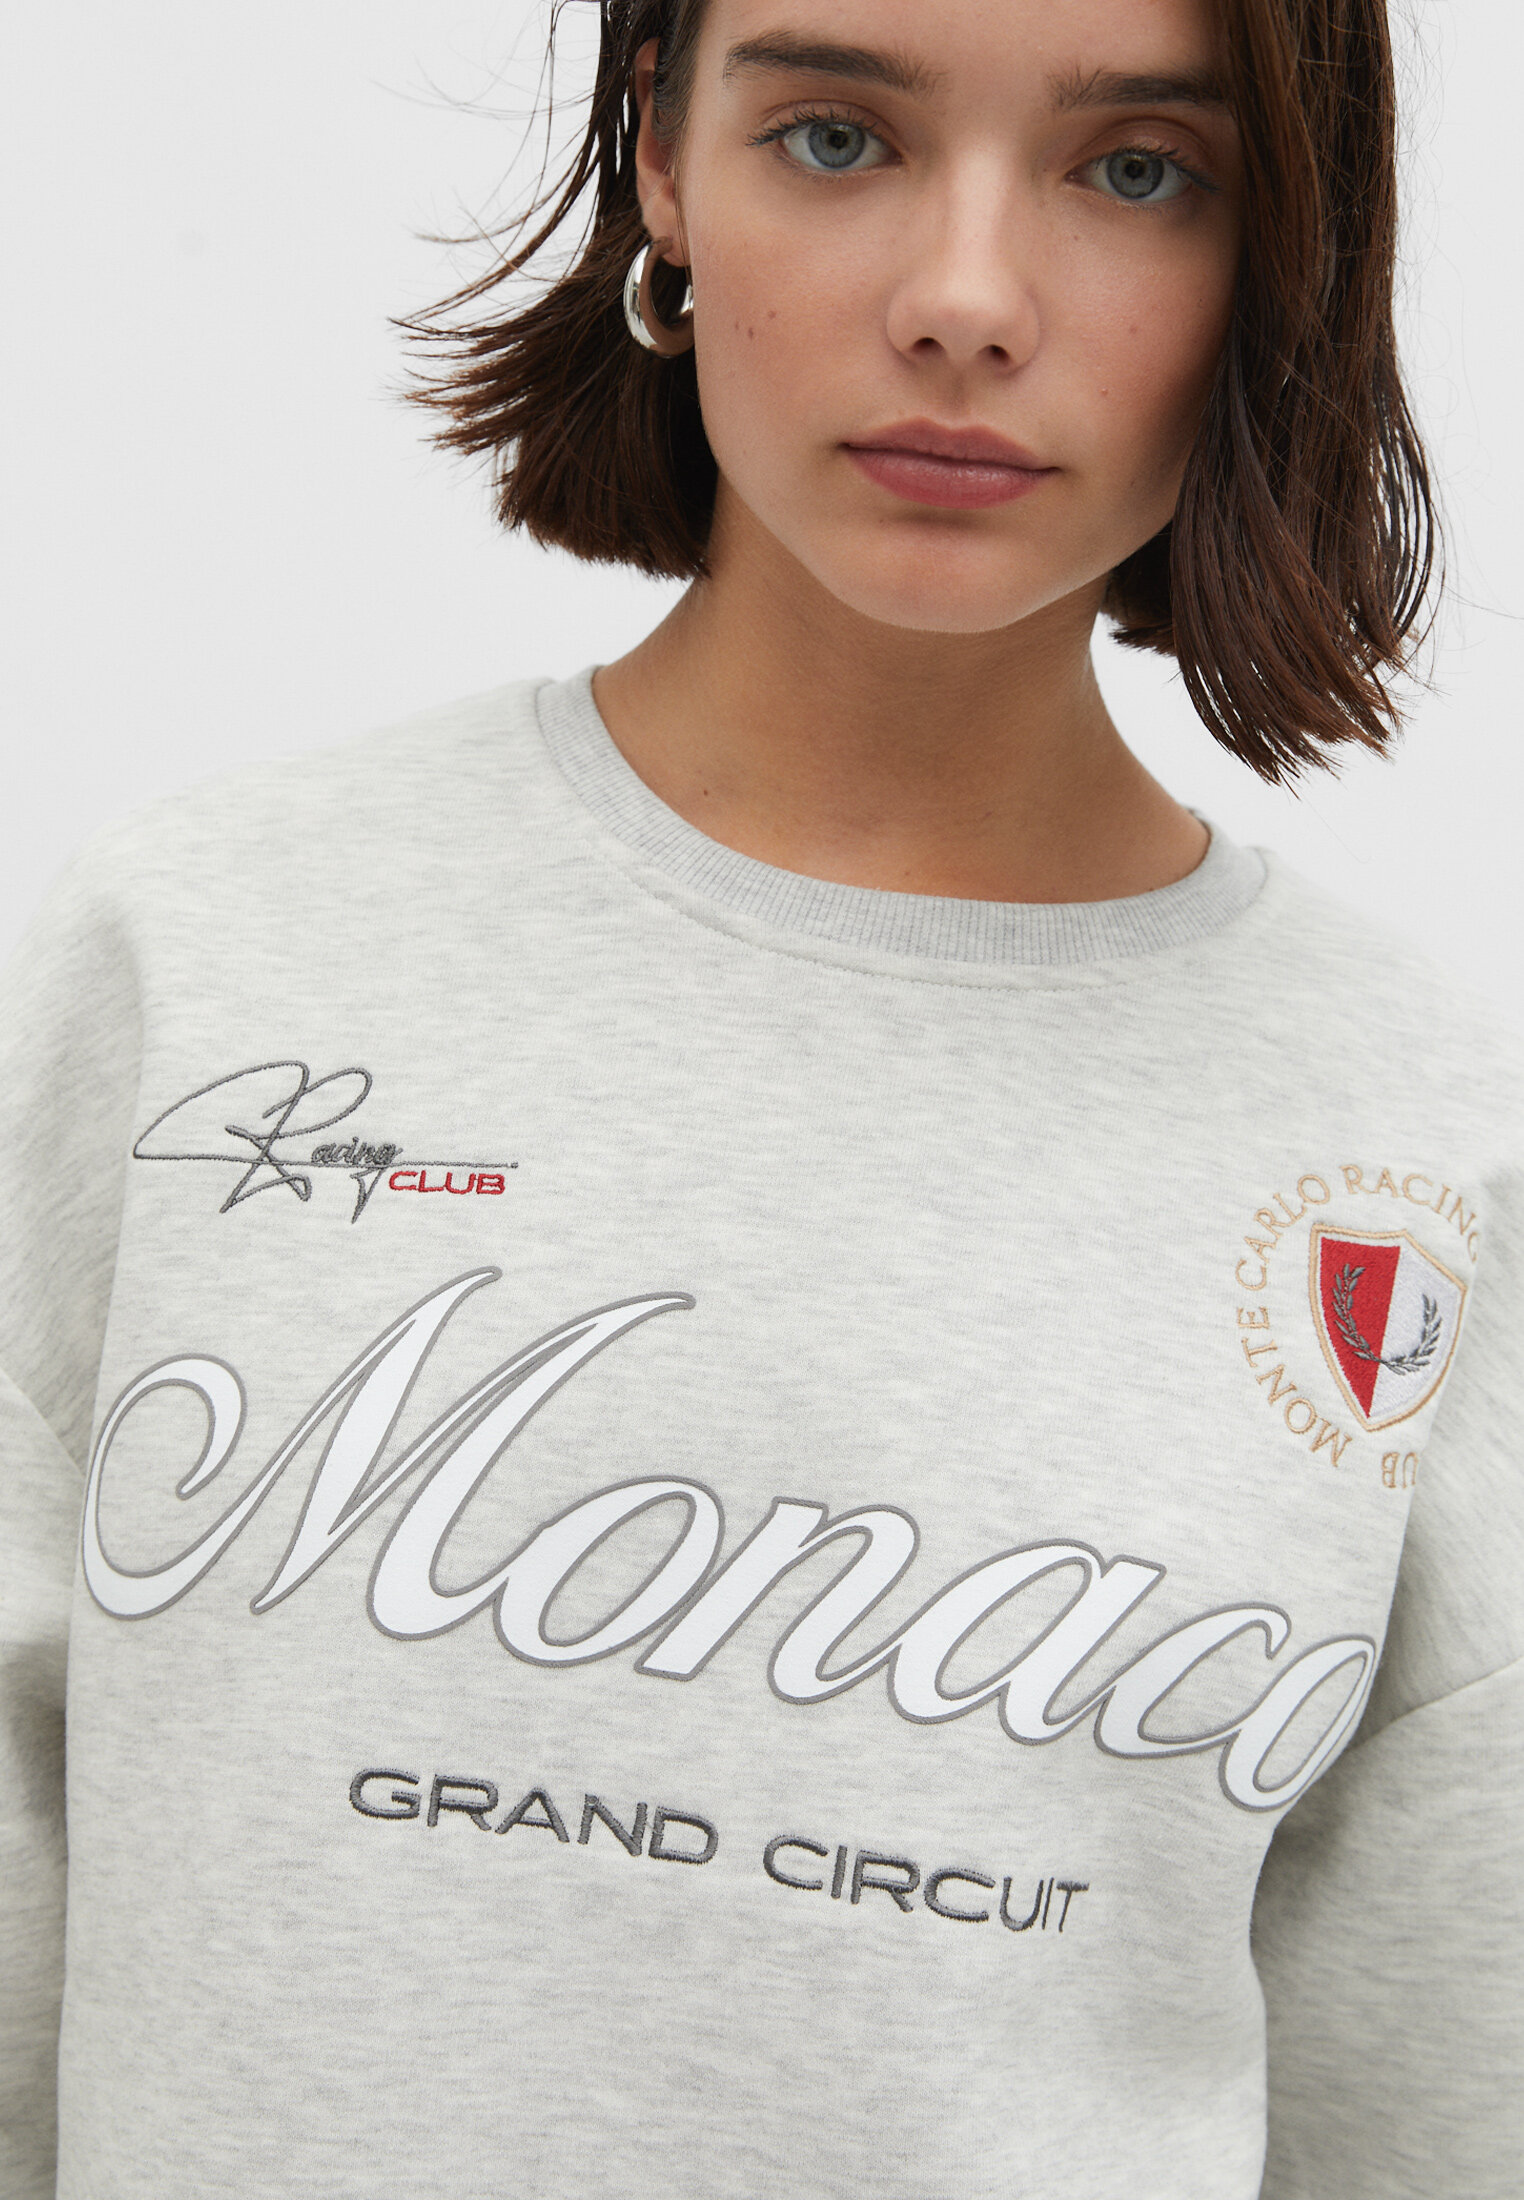 Racing sweatshirt - Women's fashion | Stradivarius United States